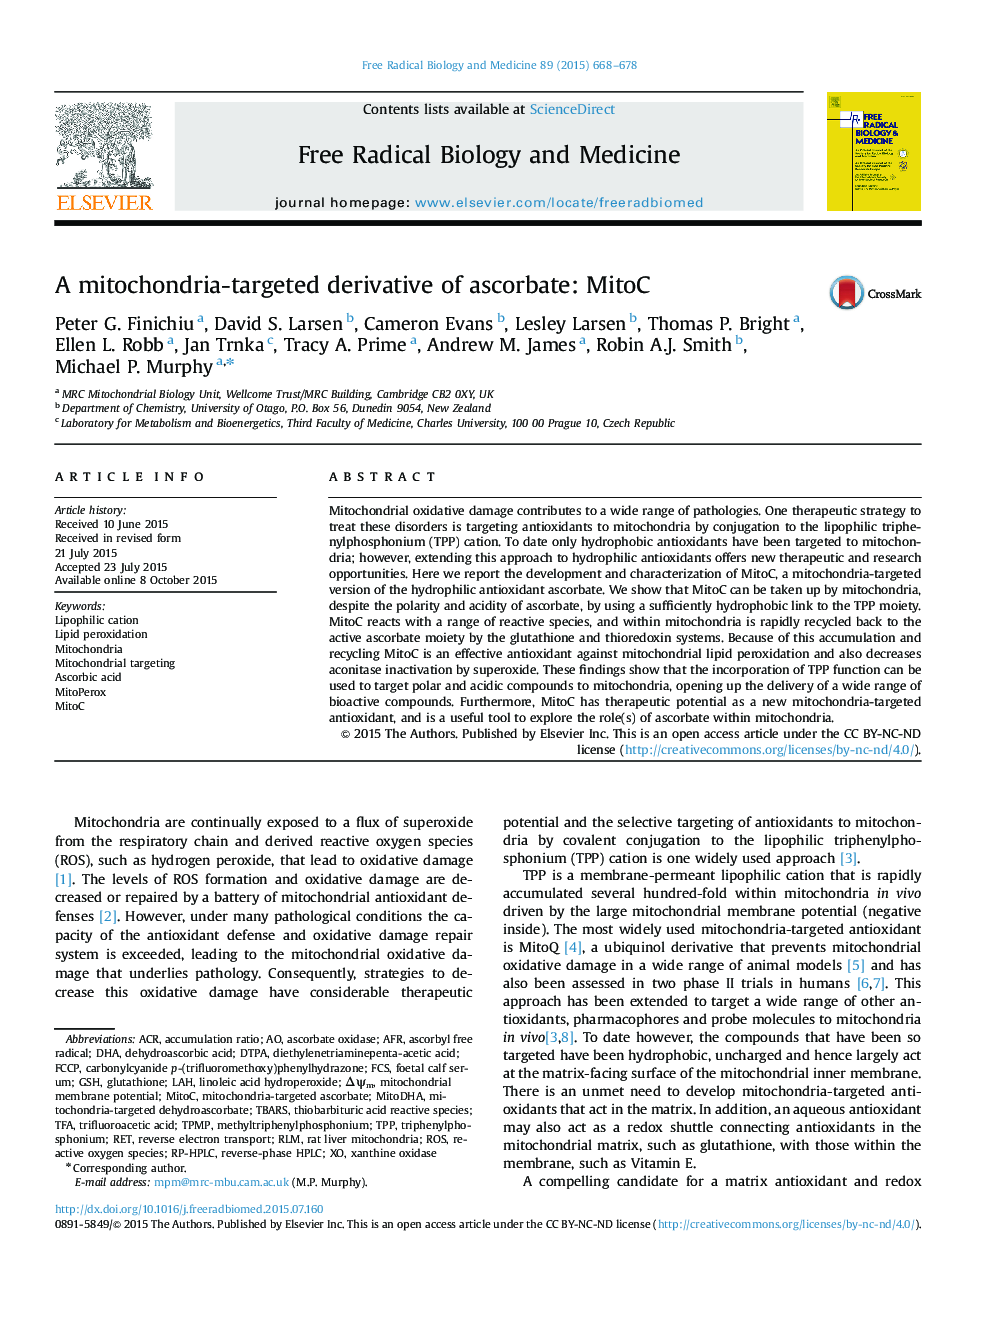 A mitochondria-targeted derivative of ascorbate: MitoC